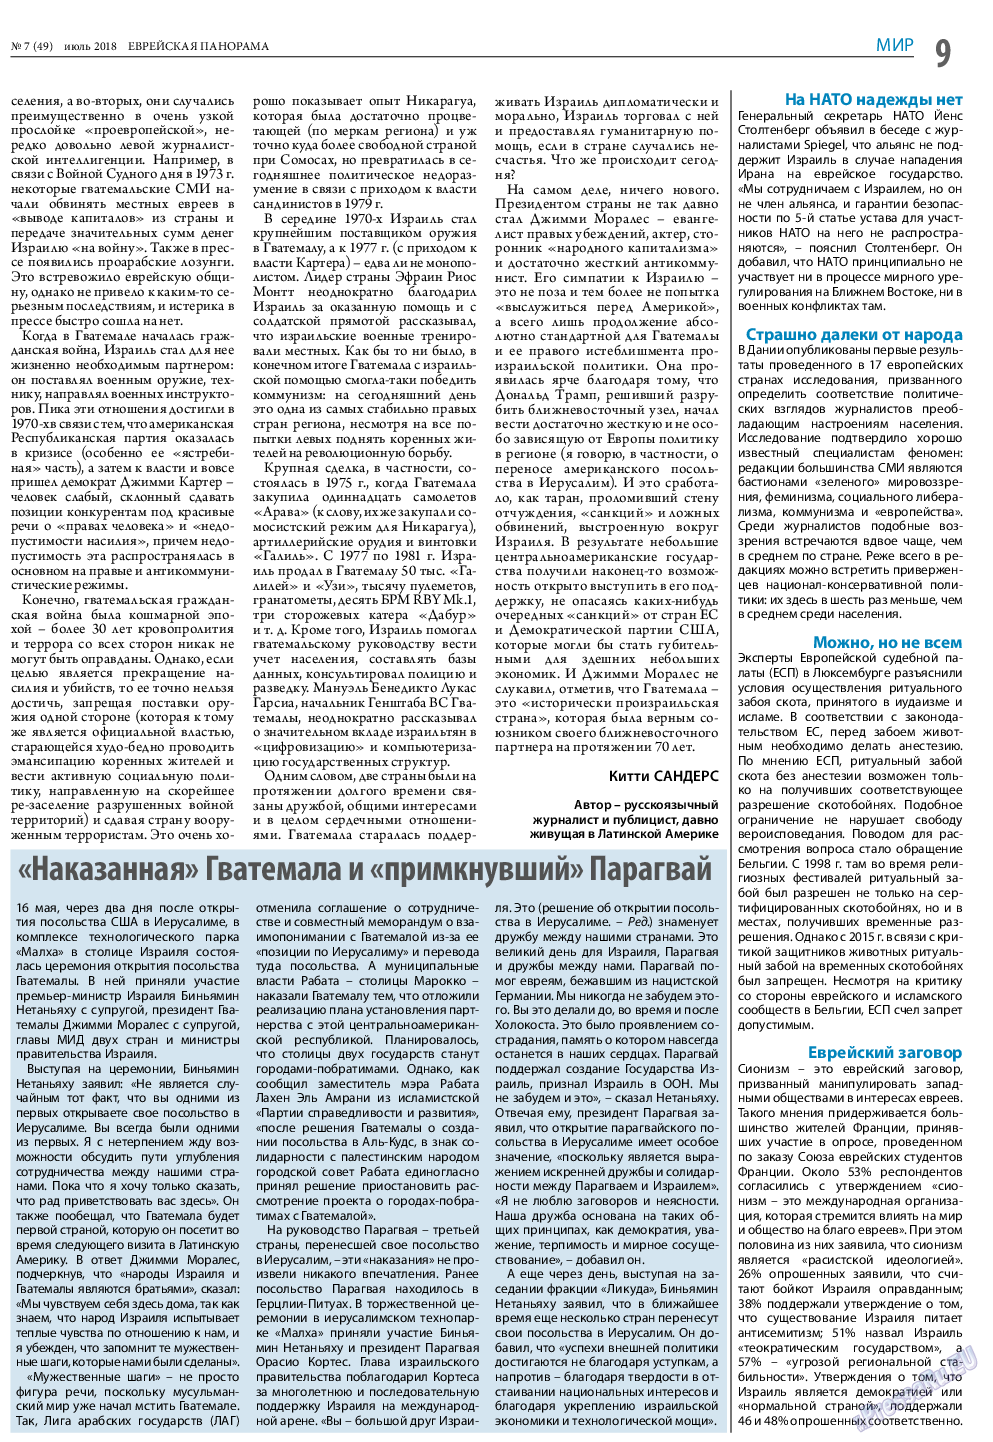 Еврейская панорама, газета. 2018 №7 стр.9